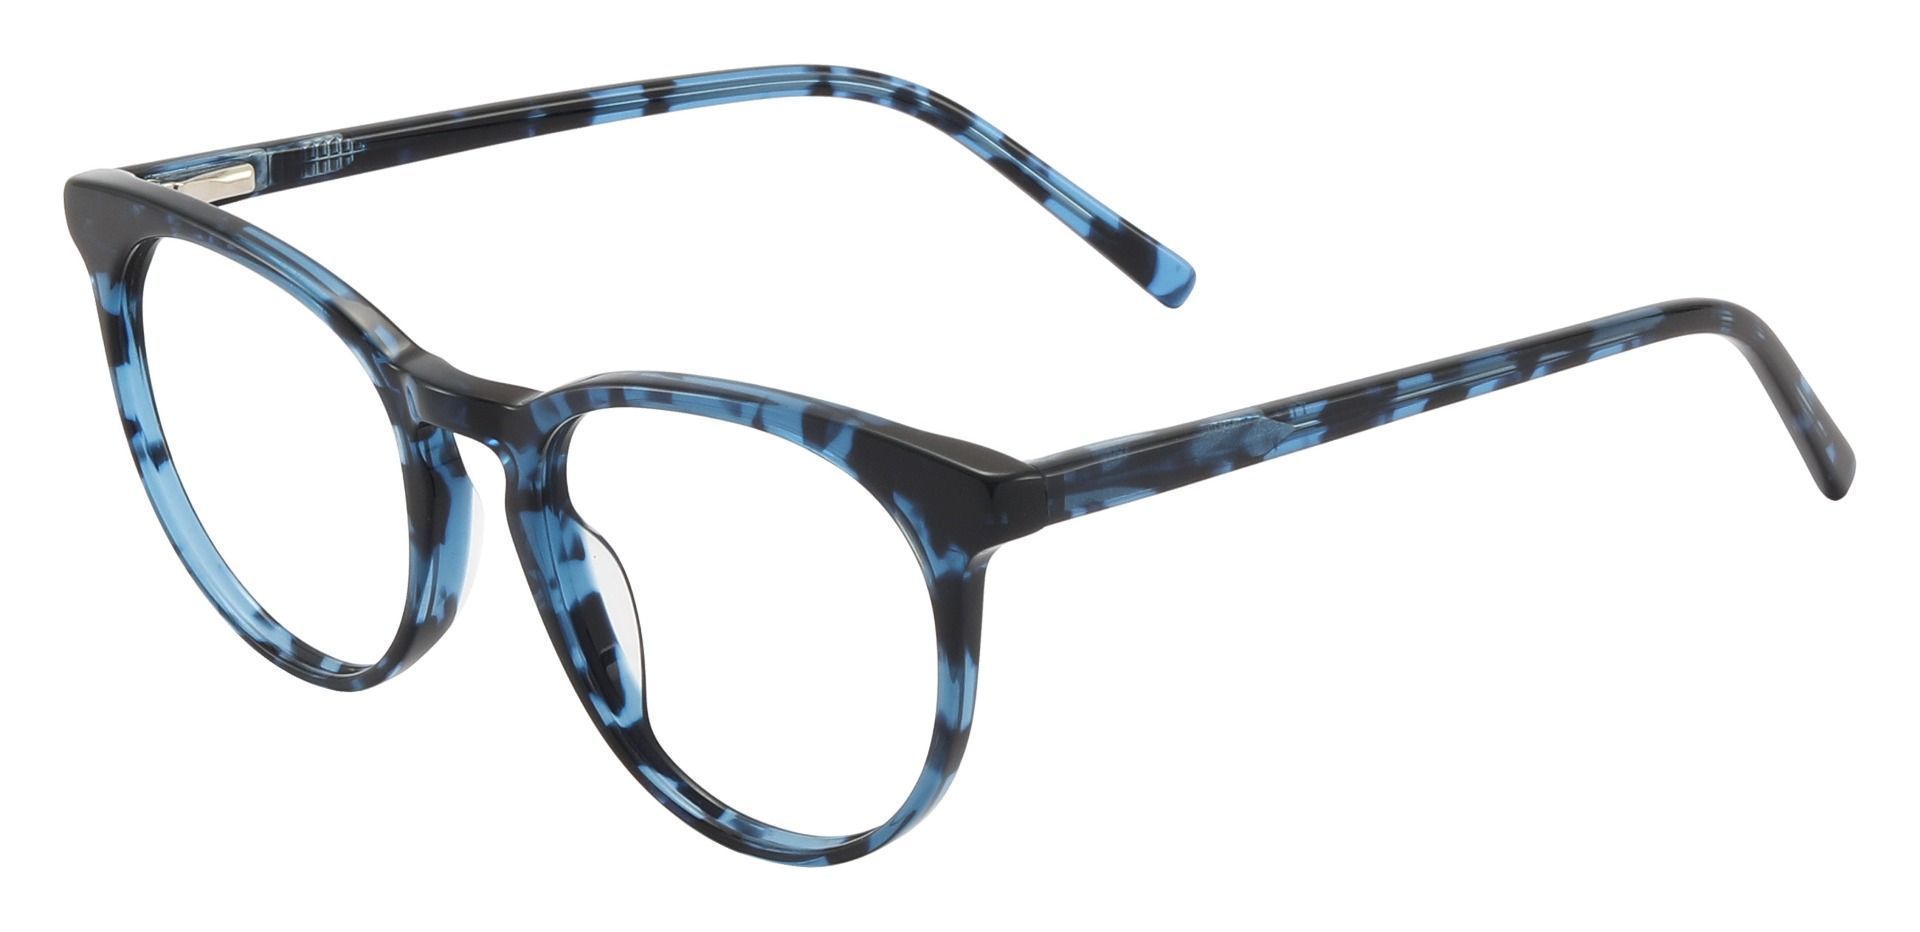 Tybee Oval Prescription Glasses - Blue